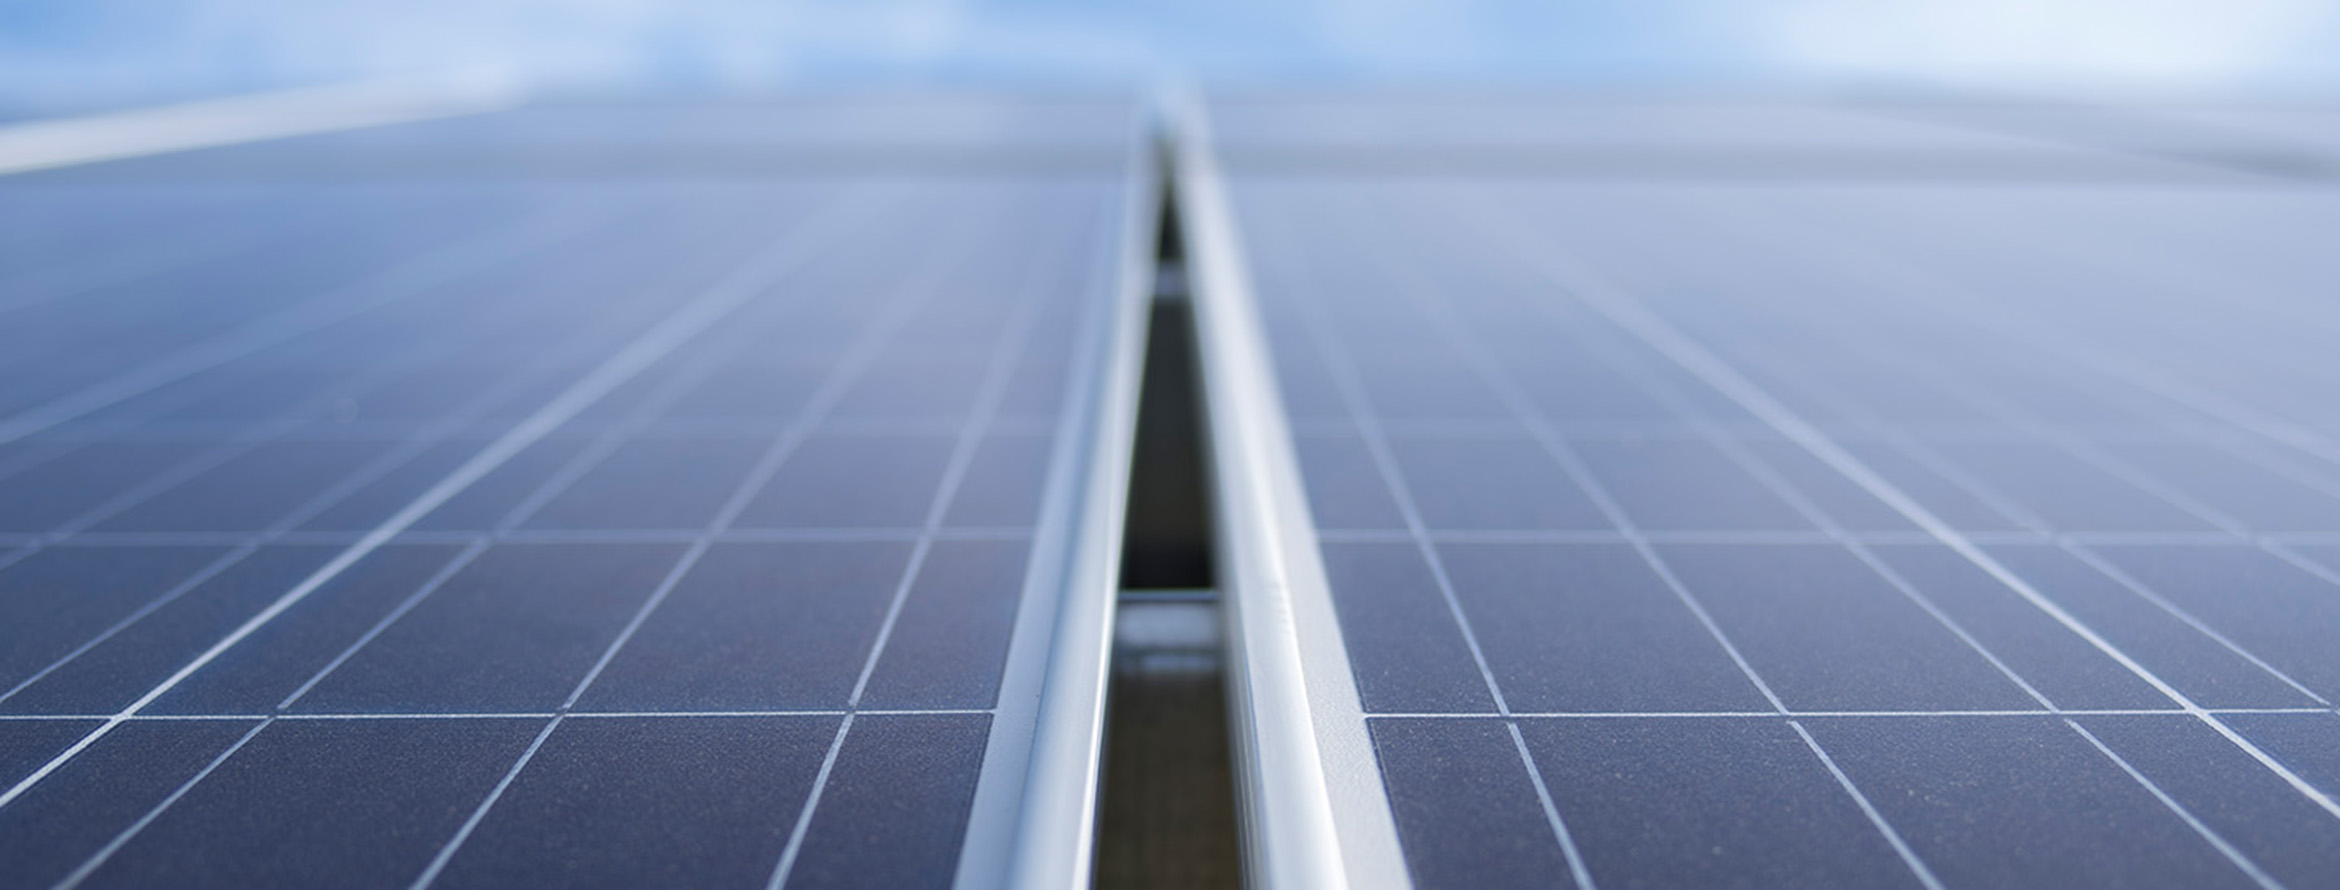 A close-up of a solar panel